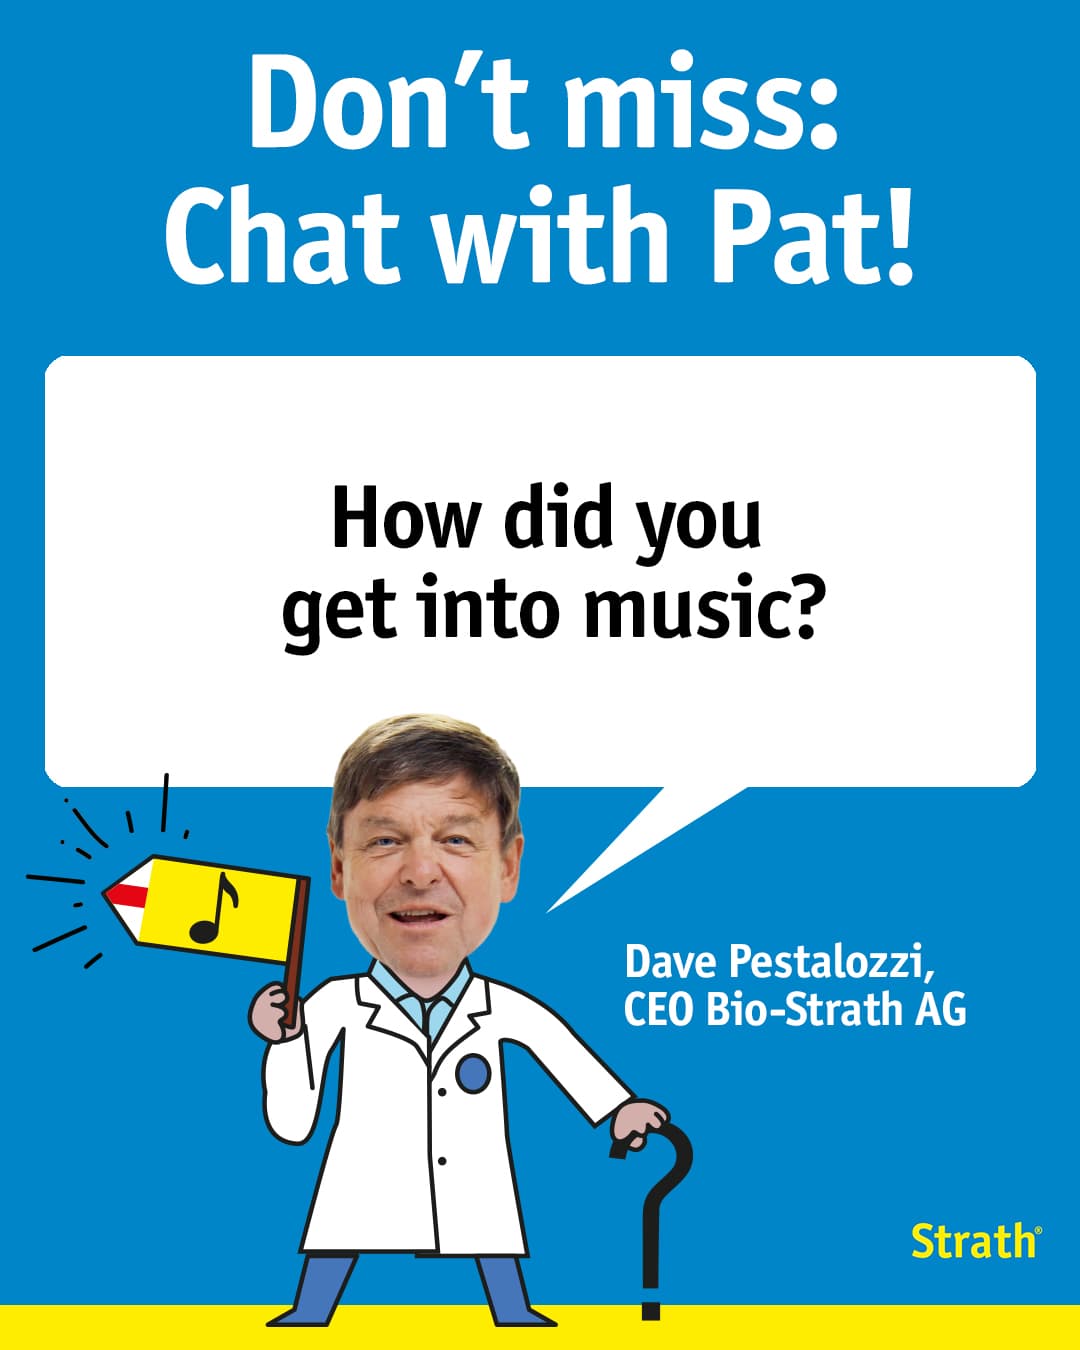 Chat with Pat Burgener - Music